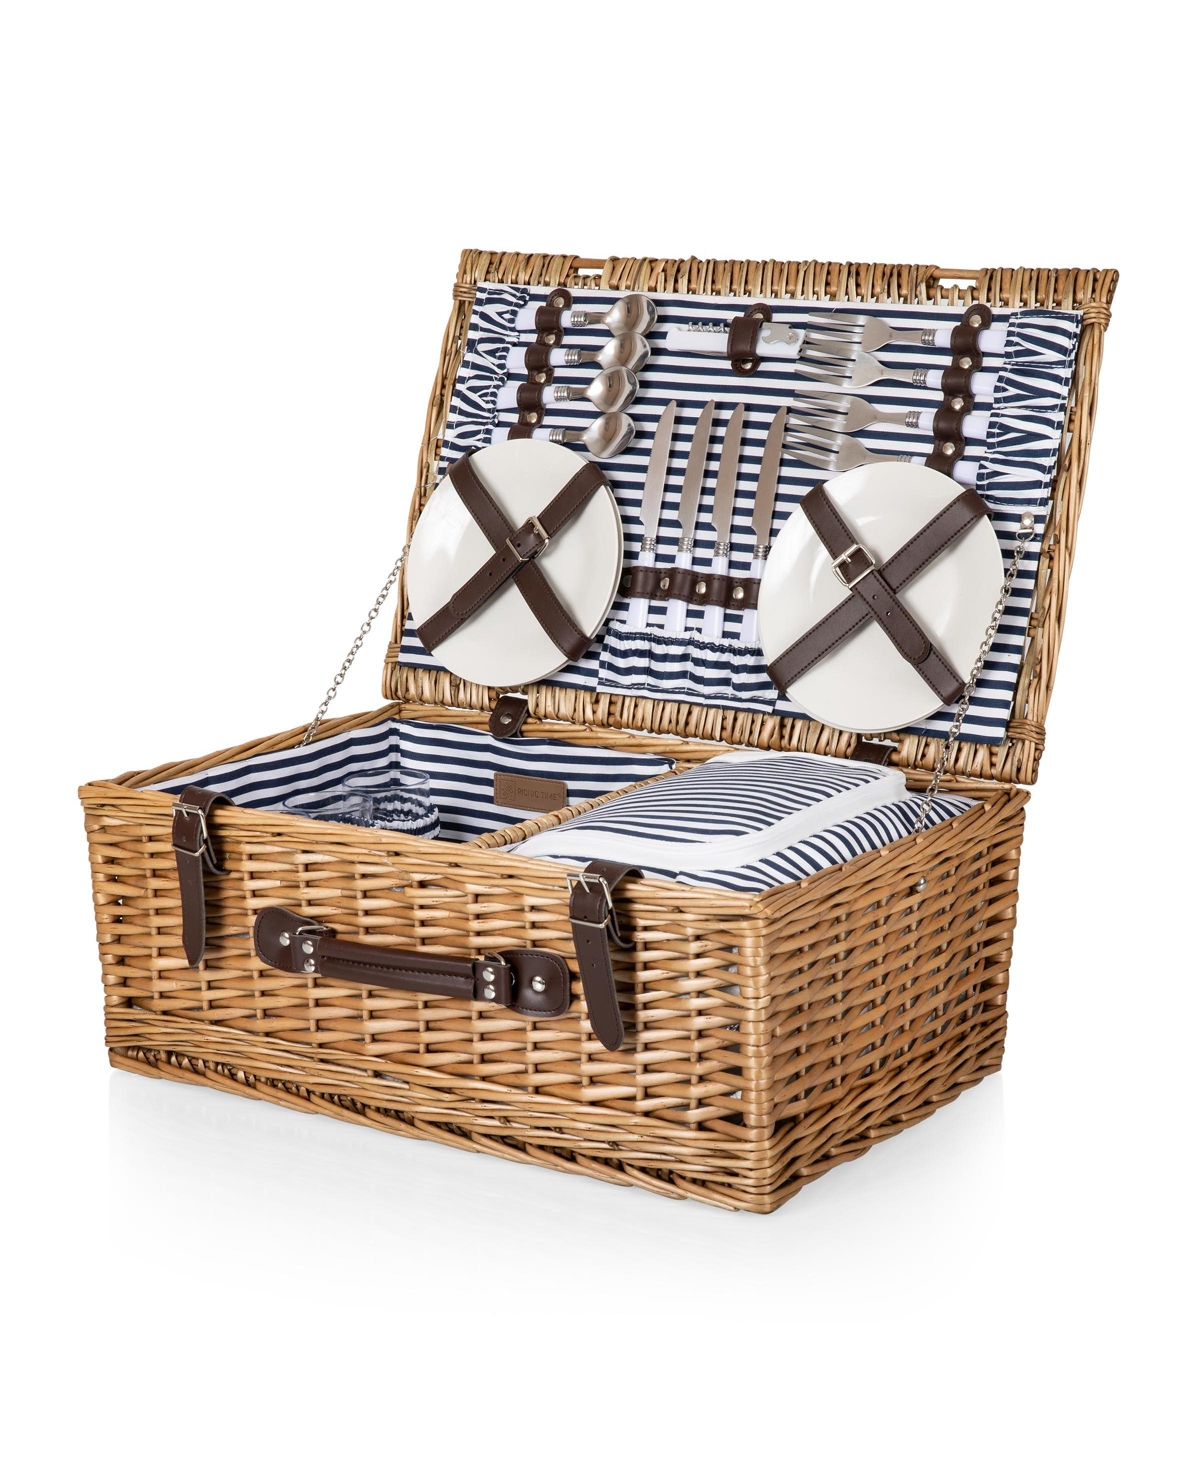 Picnic Time Kansas Handwoven Wood Picnic Basket, Navy Blue & White Stripe